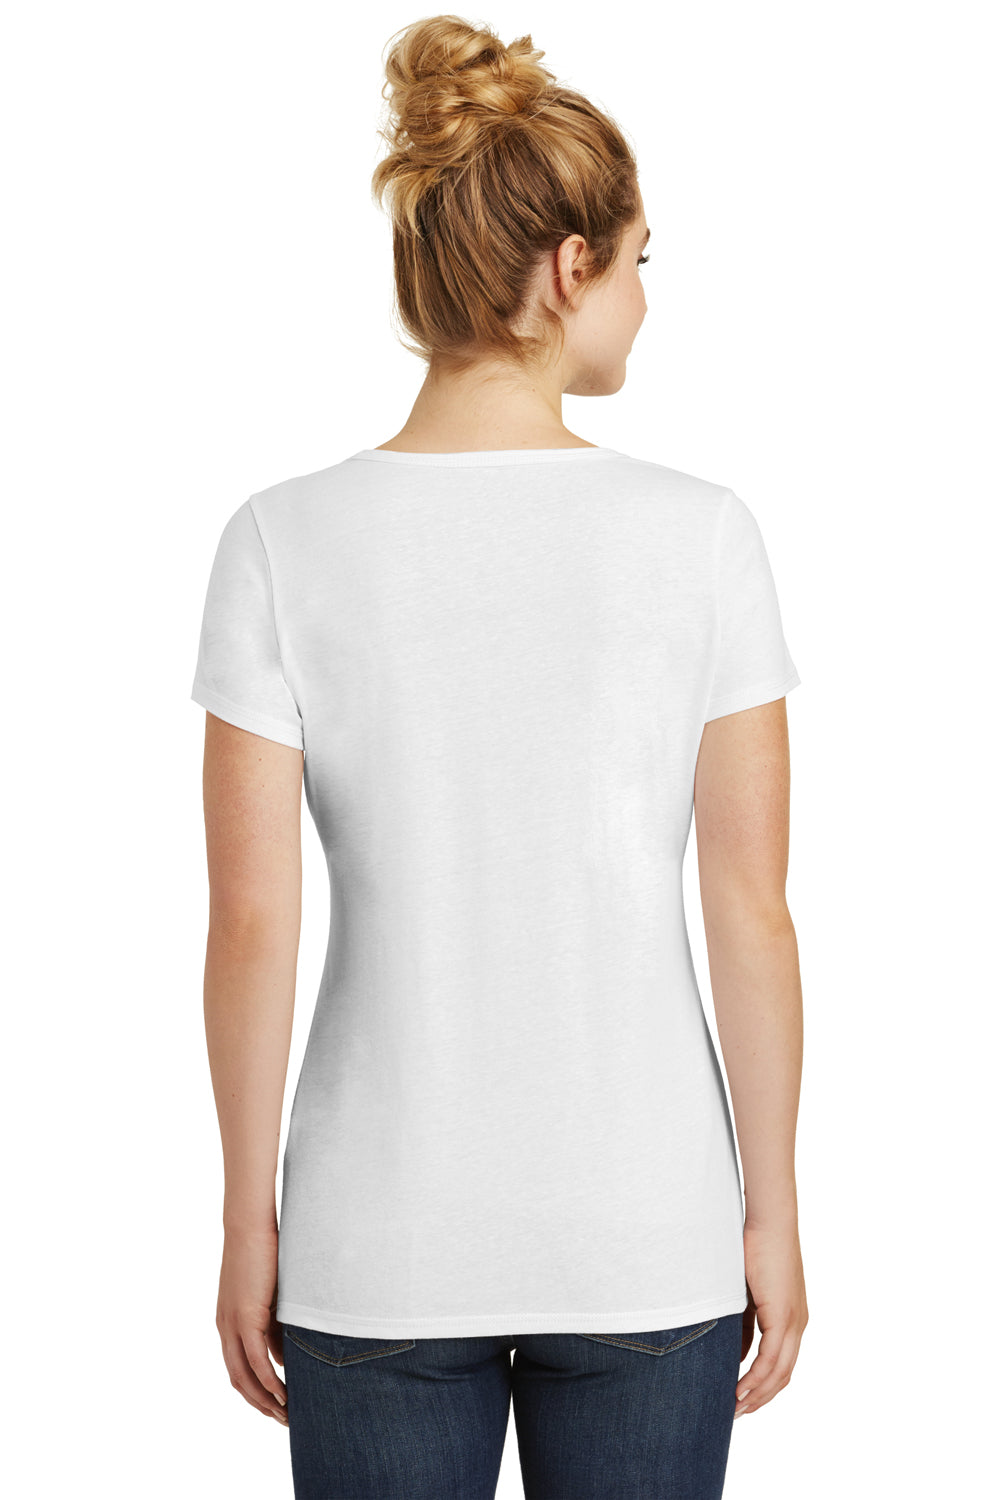 New Era LNEA130 Womens Performance Moisture Wicking Short Sleeve Crewneck T-Shirt White Back